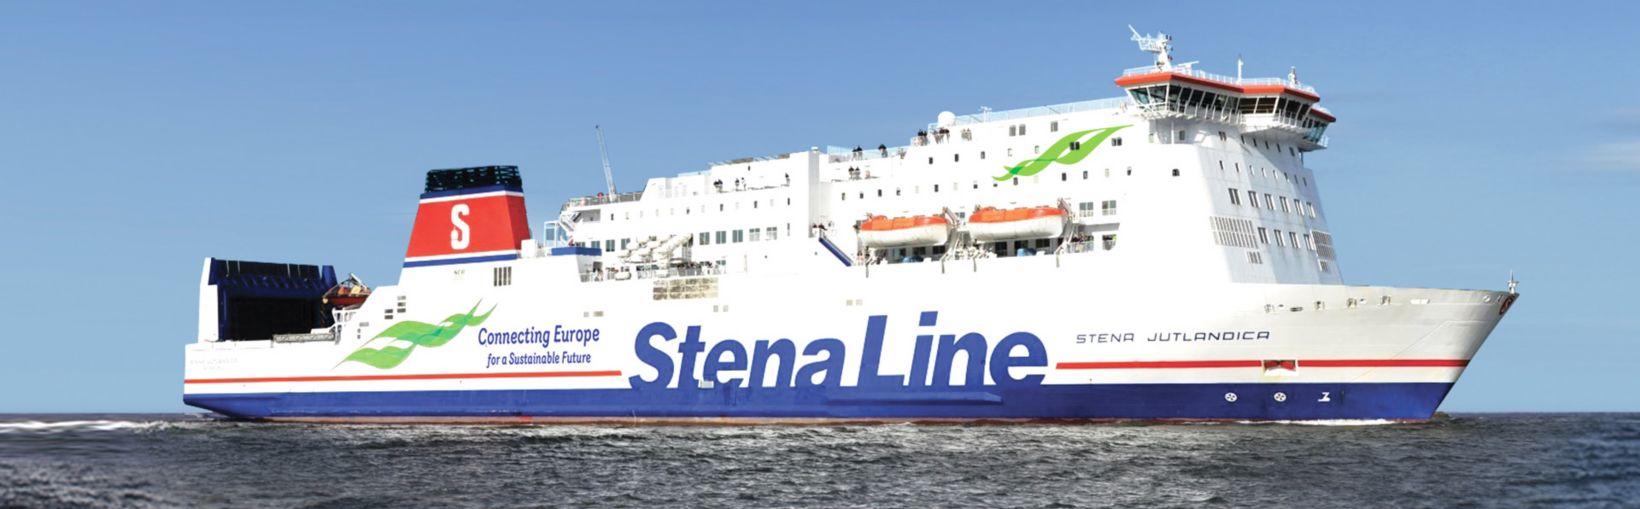 Stena Jutlandica | Ferry to Frederikshavn and Gothenburg | Stena Line